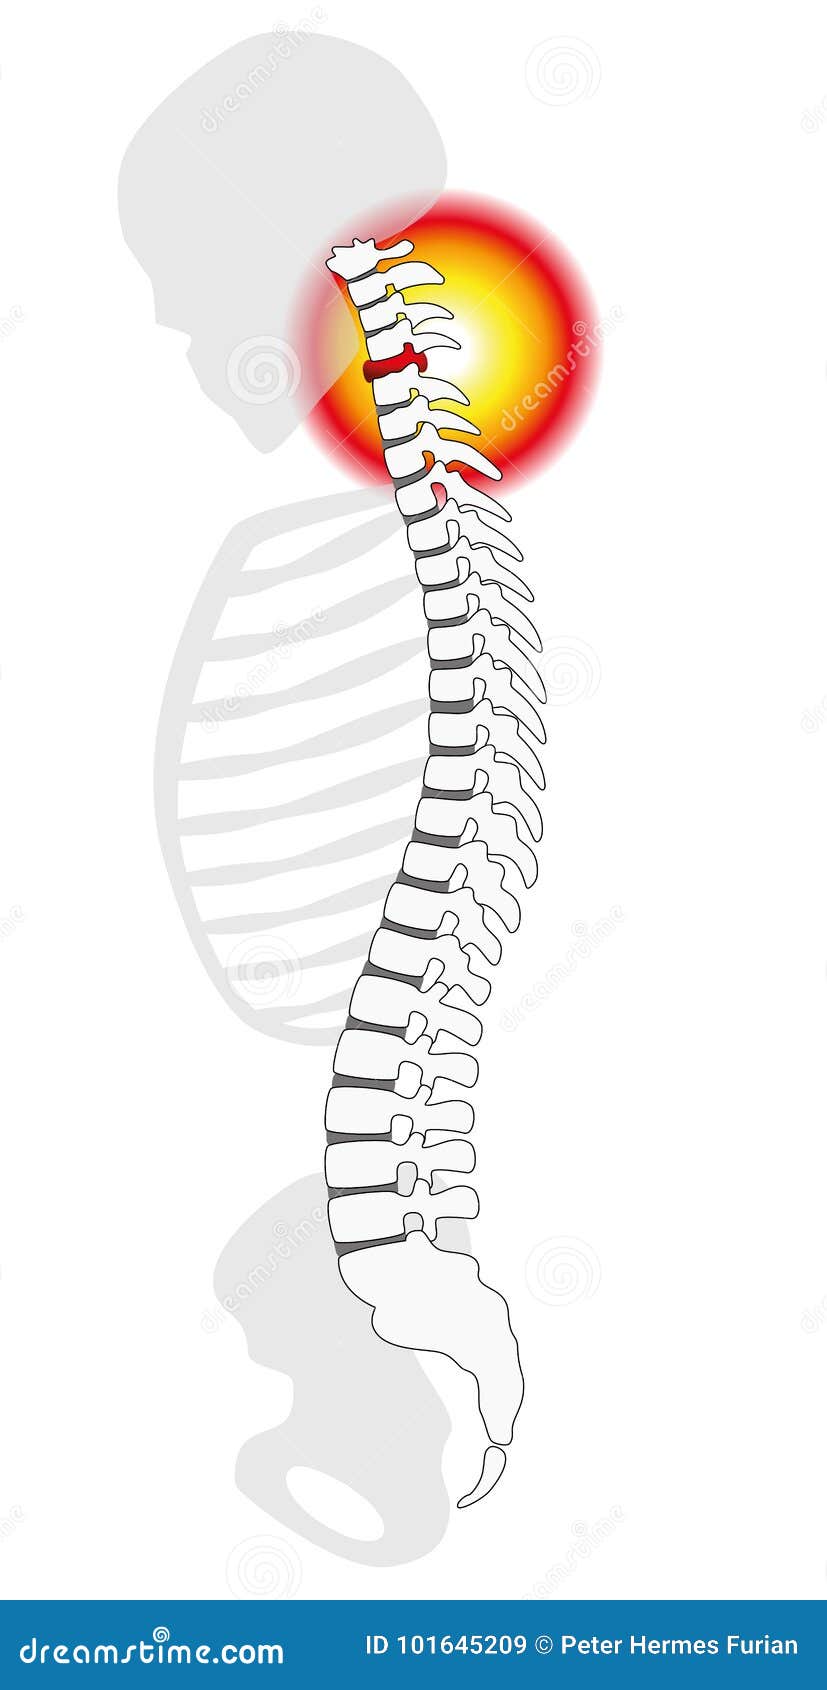 neck pain cervical vertebrae spinal disc prolapse